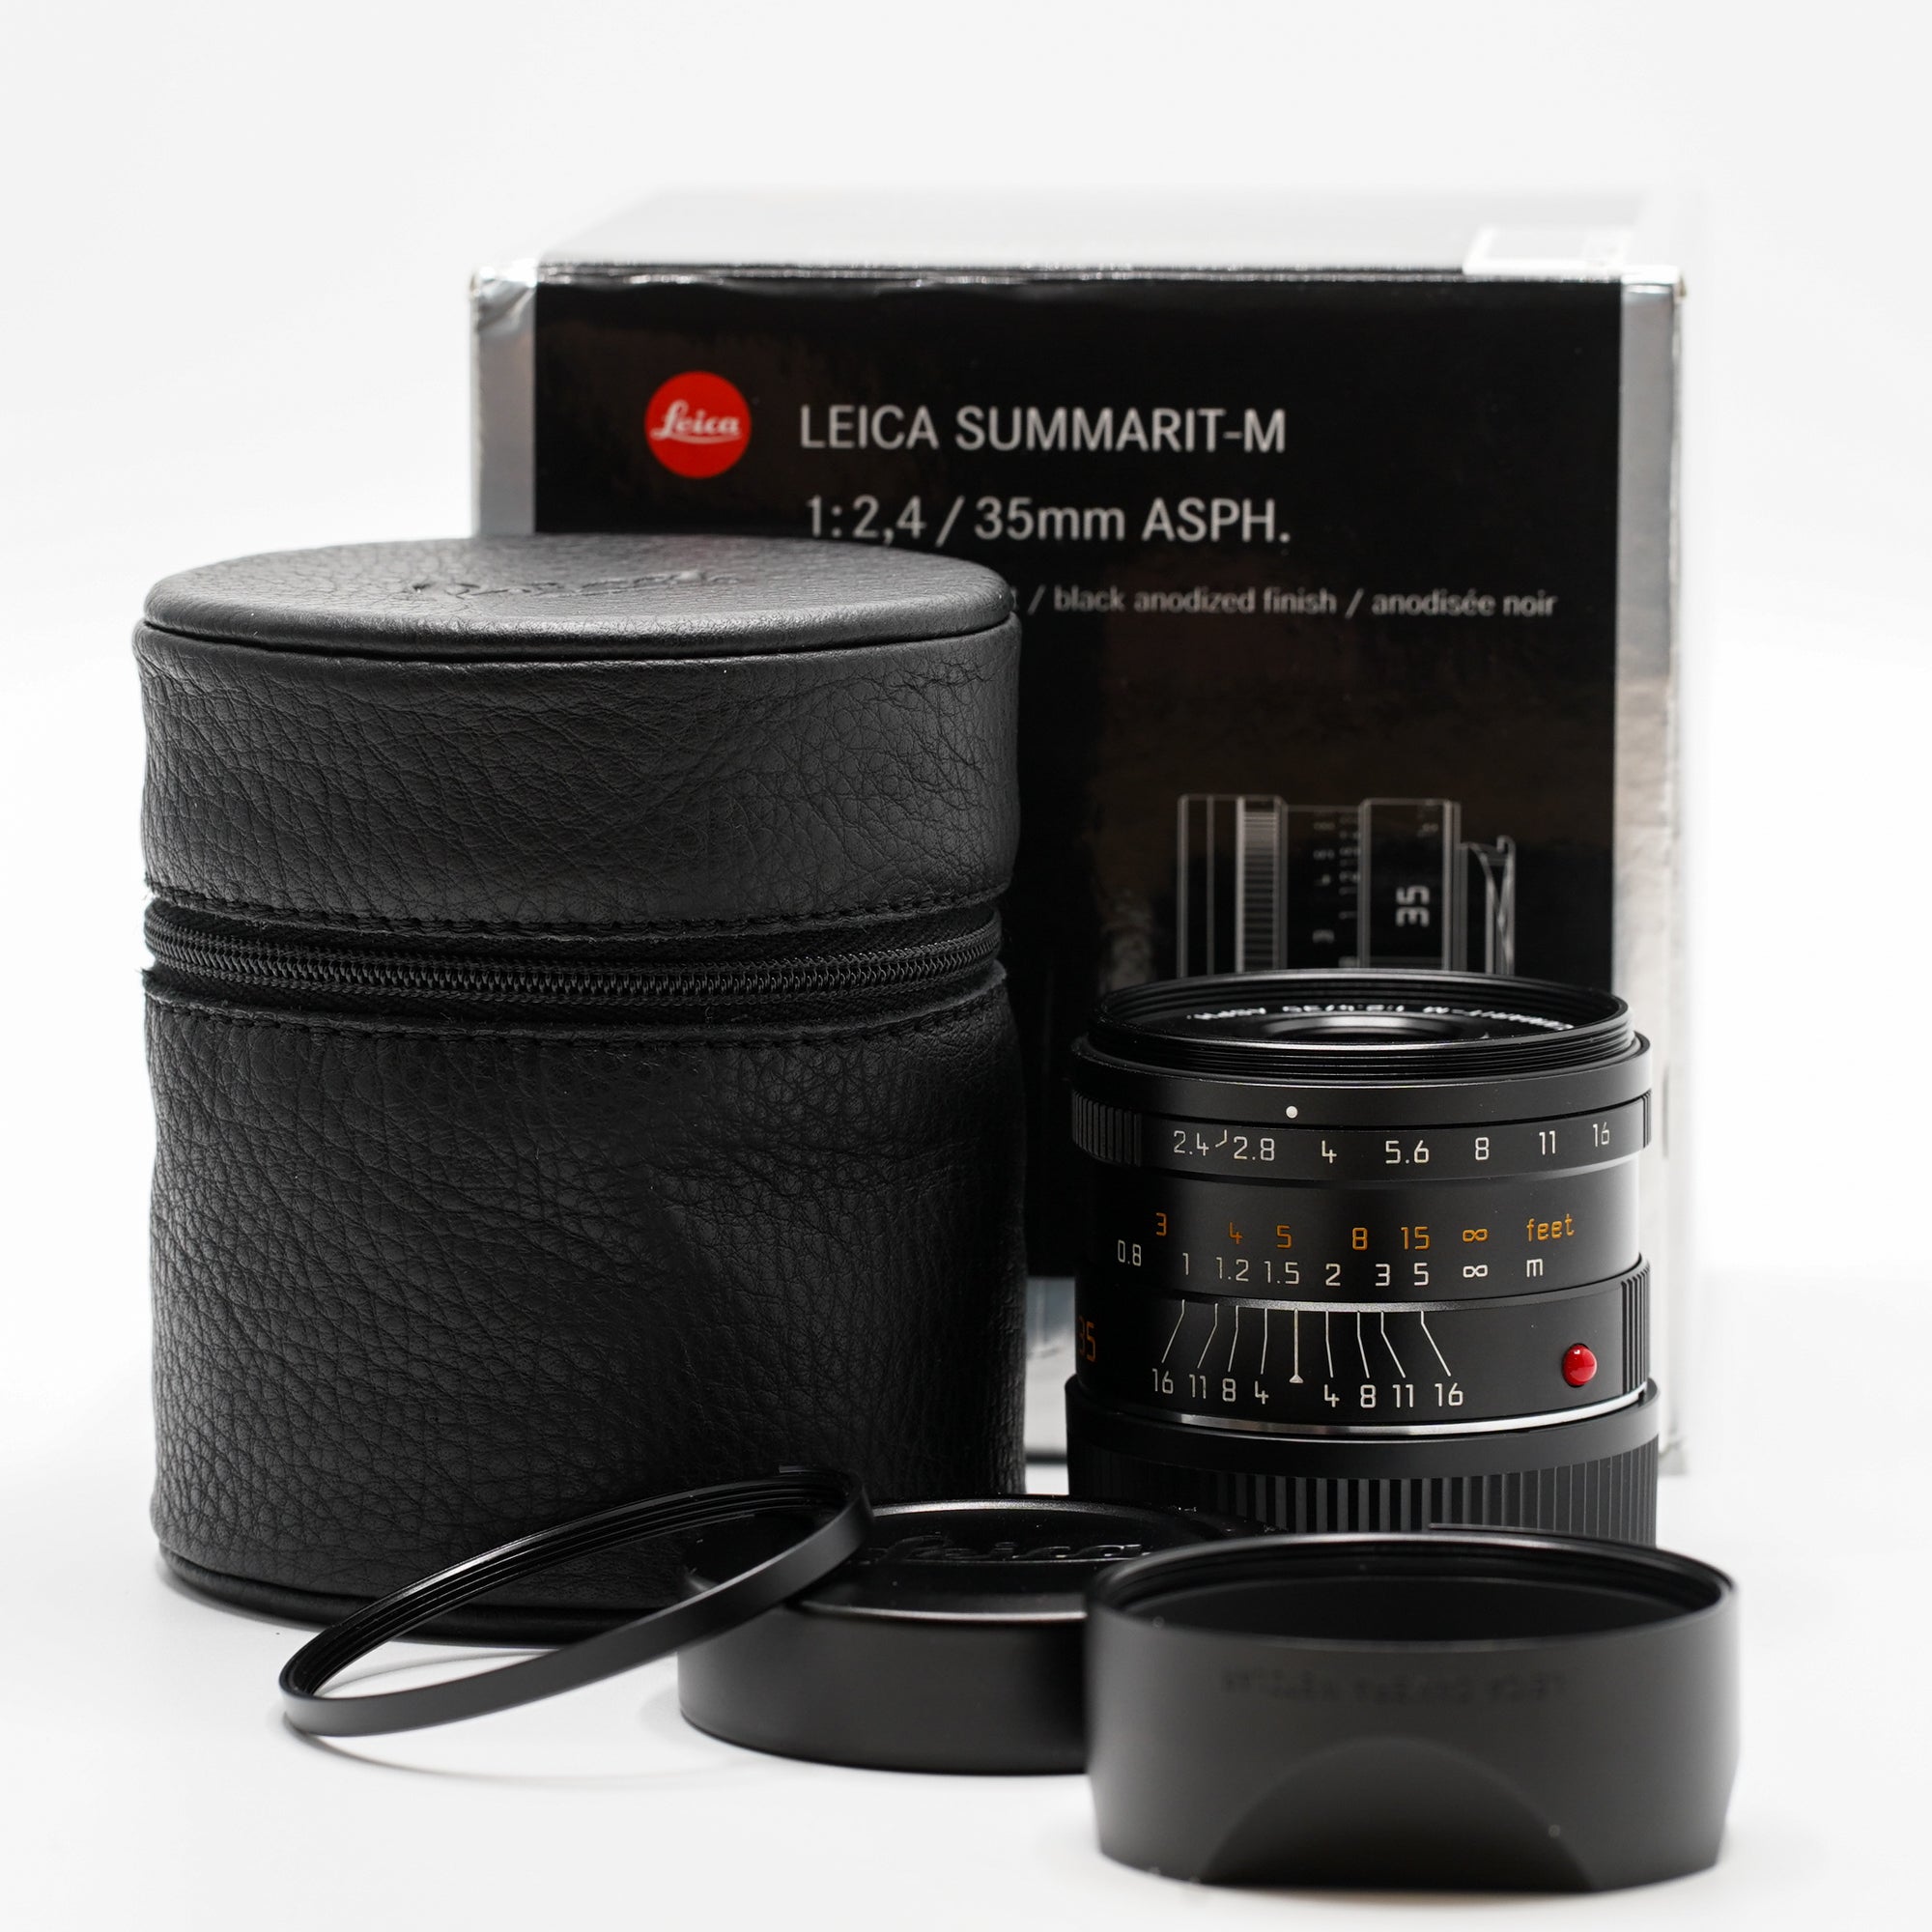 Leica Summarit-M 35mm F2.4 schwarz